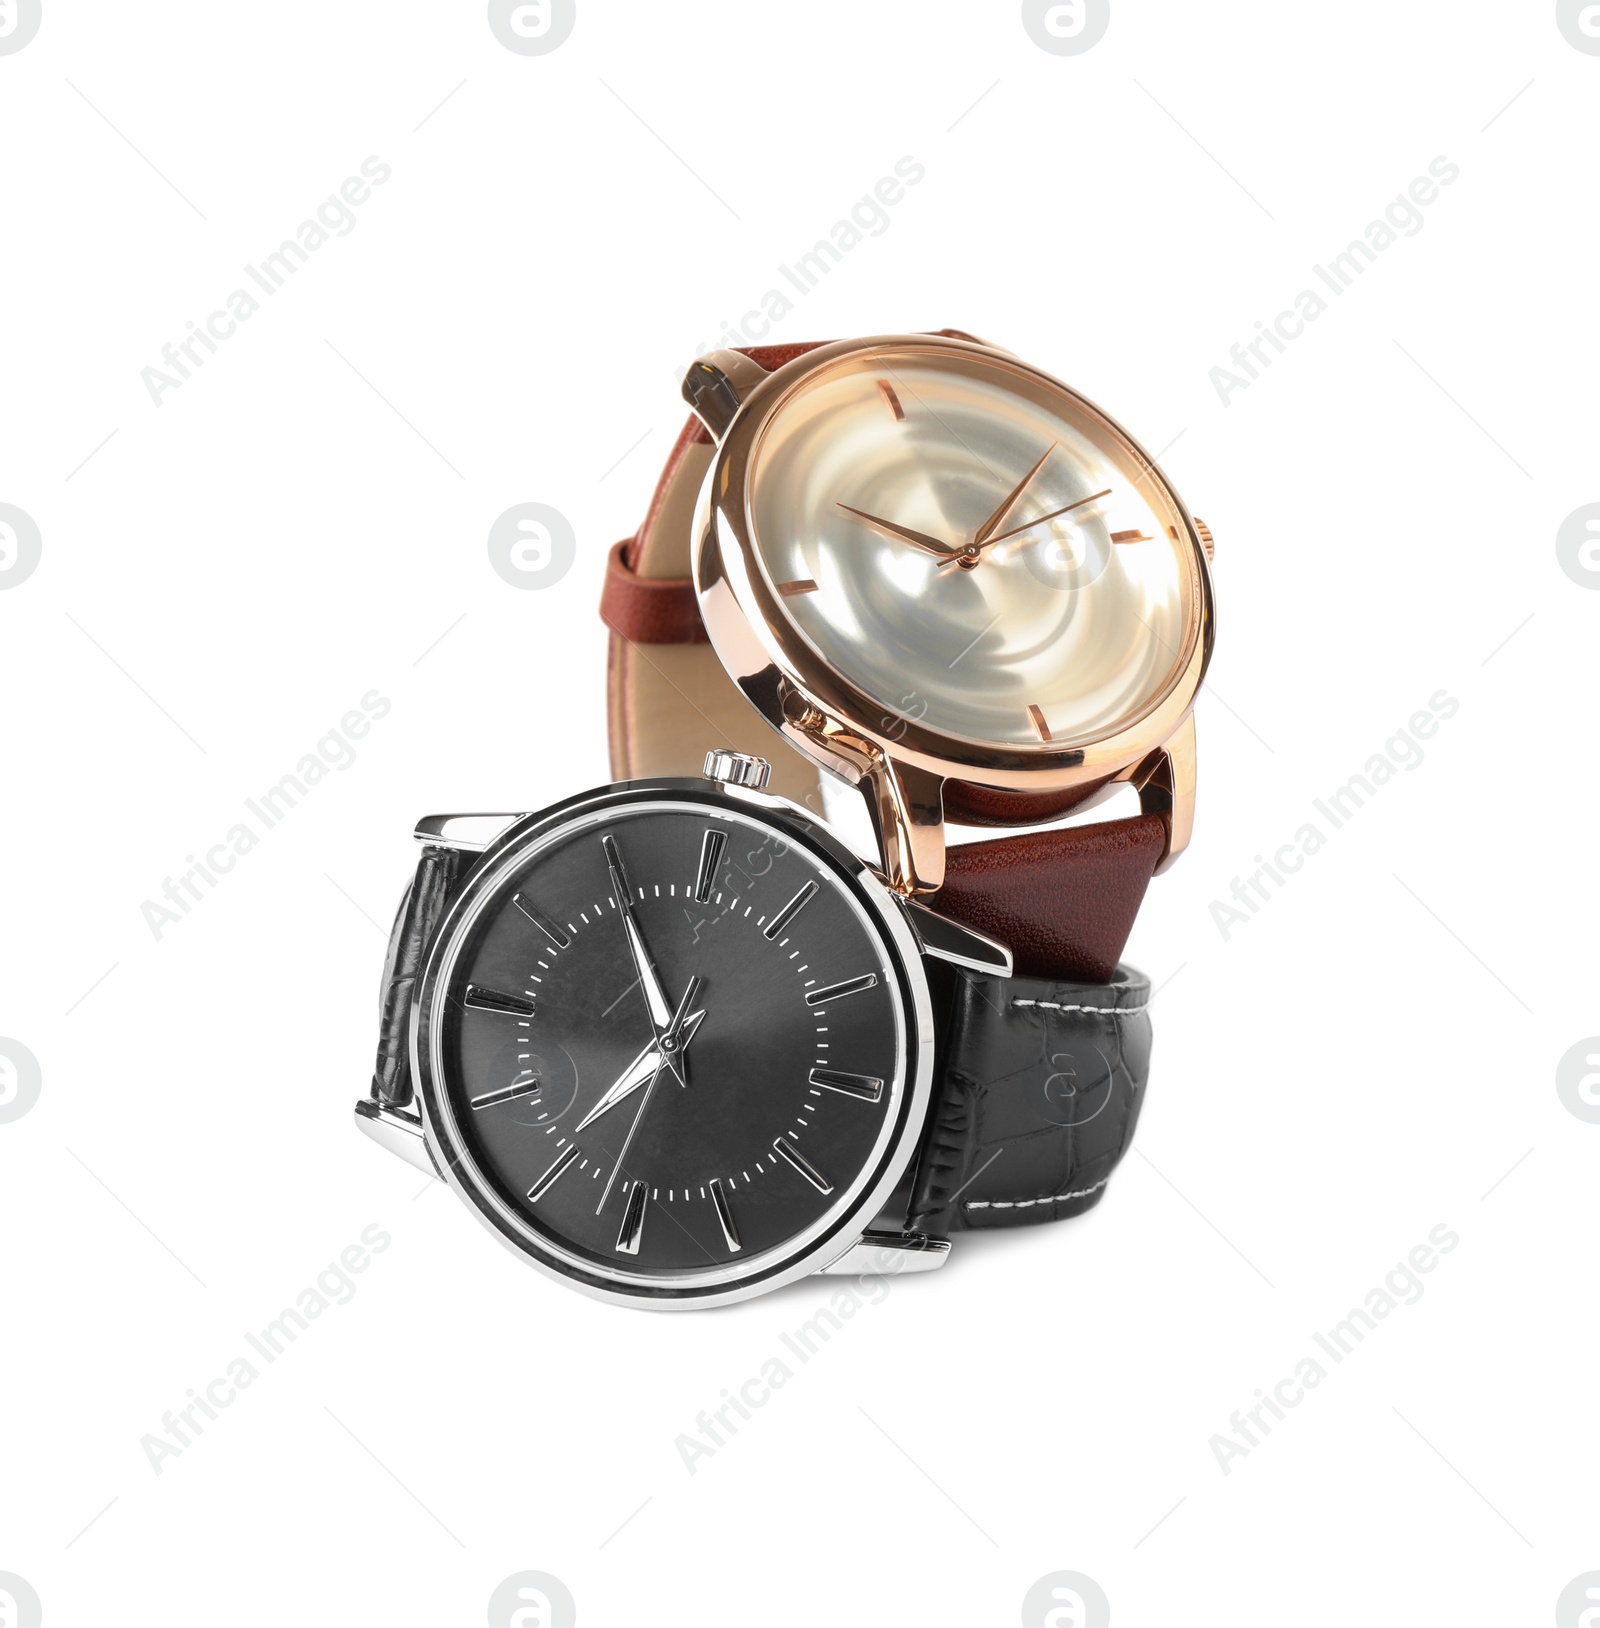 Photo of Luxury wrist watches on white background. Fashion accessories